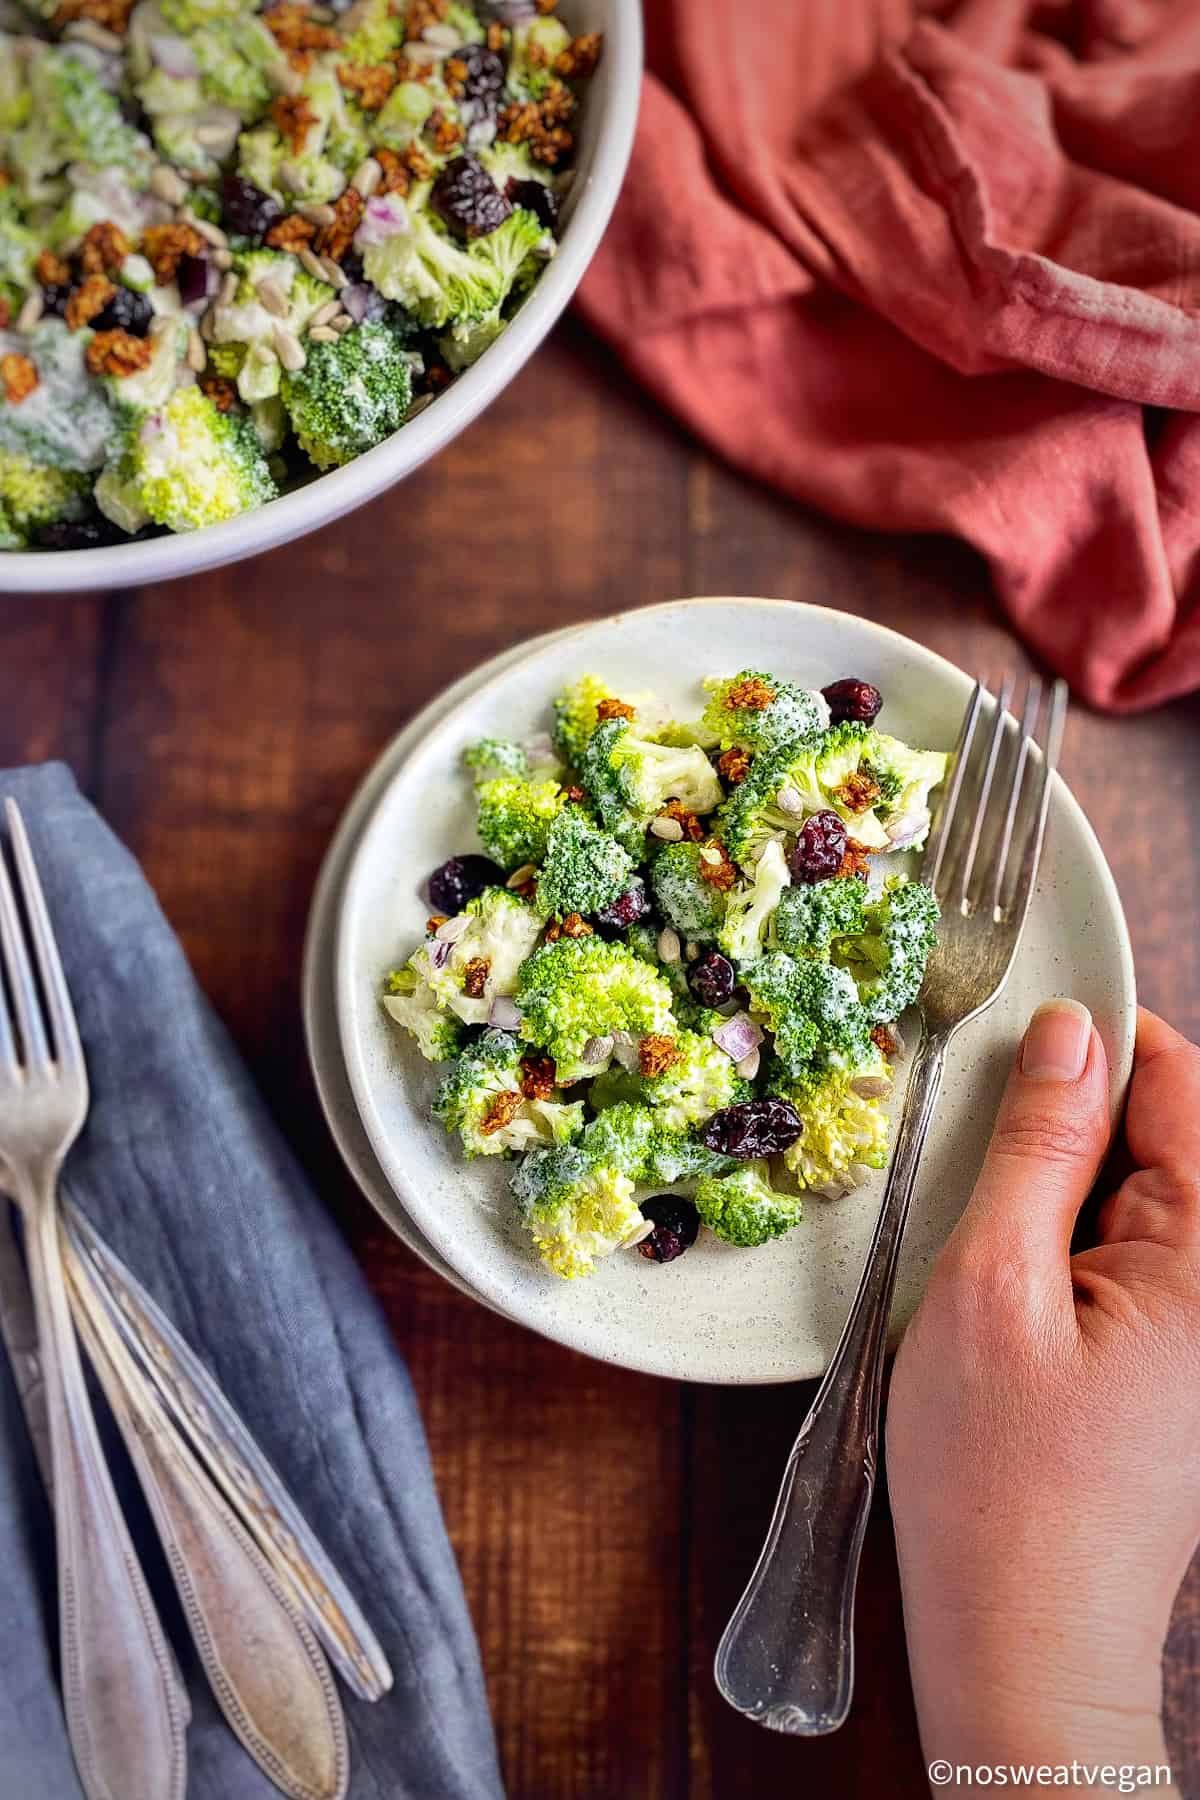 Small plate with Broccoli salad next to bowl with broccoli salad.